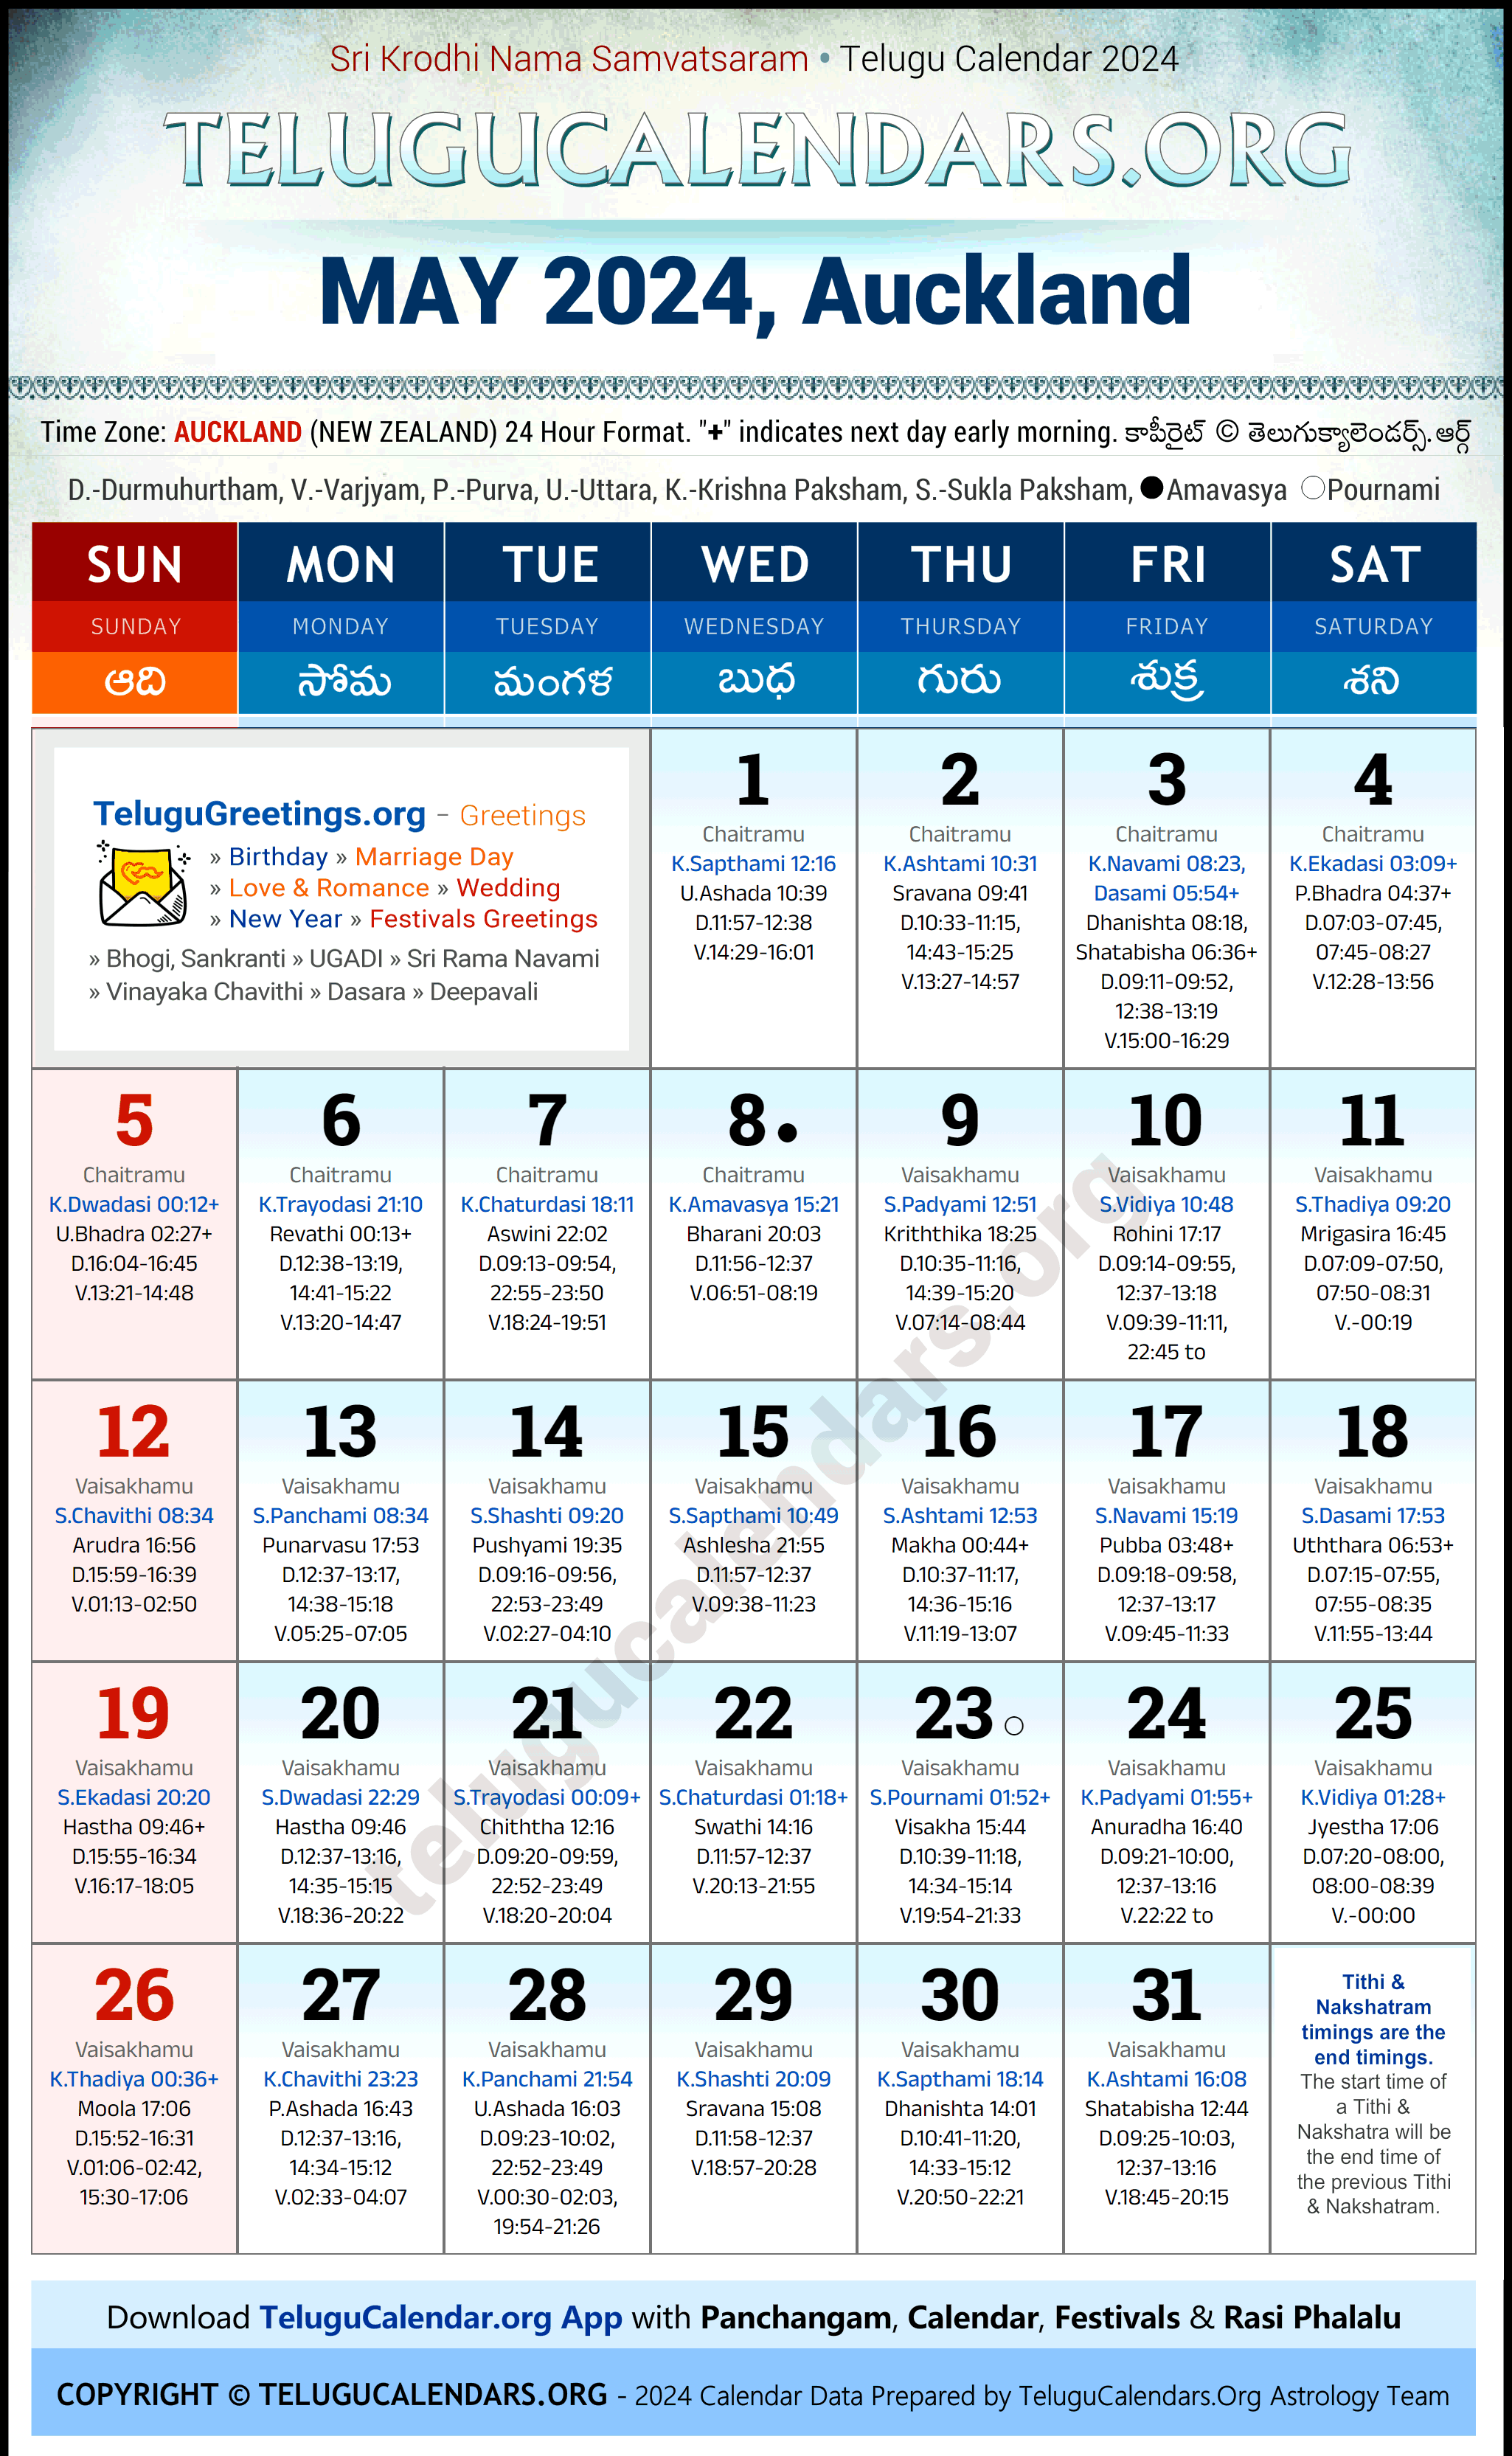 Telugu Calendar 2024 May Festivals for Auckland